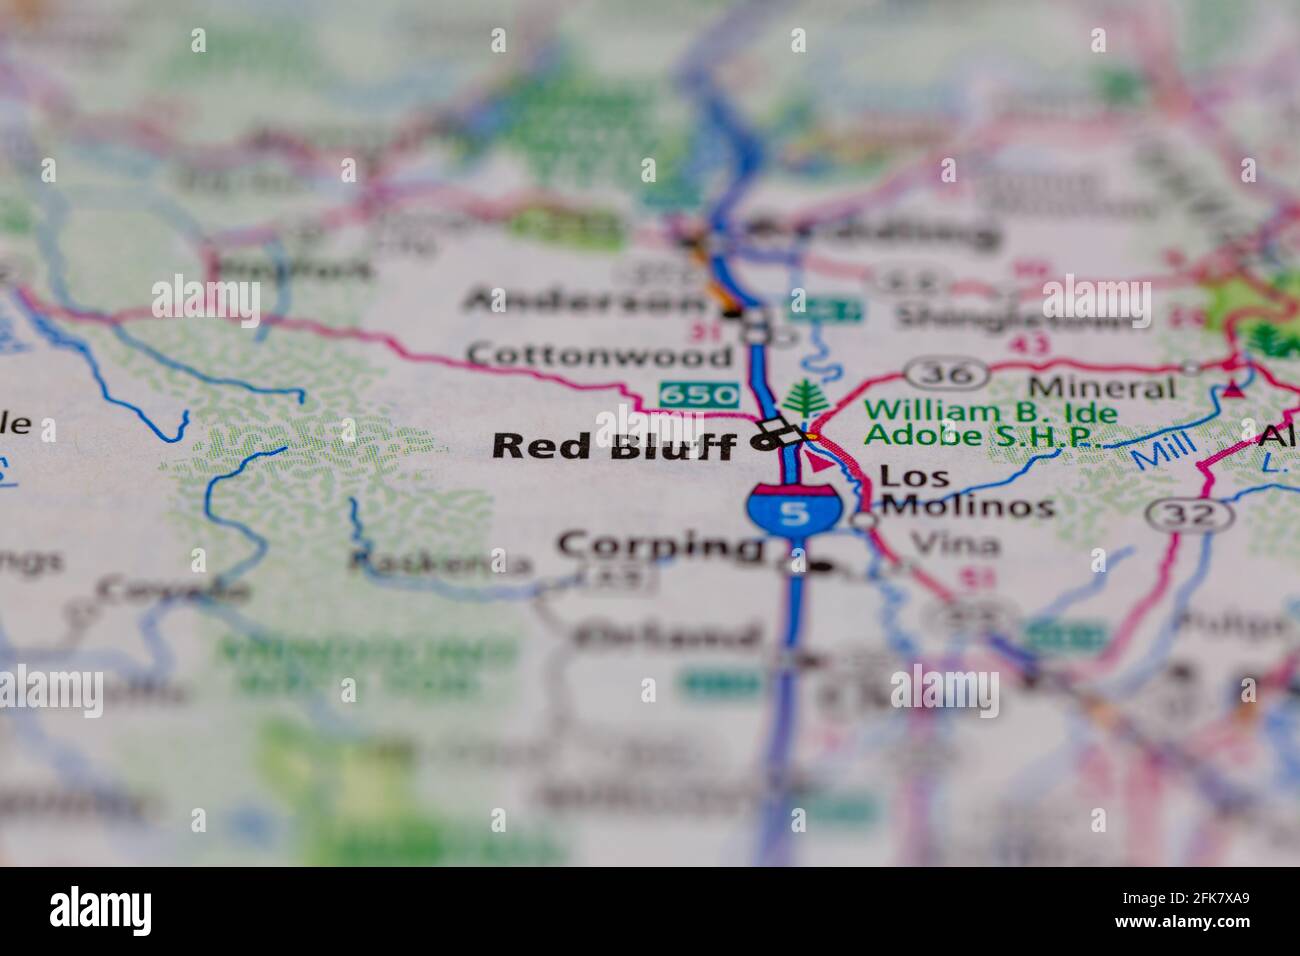 Red Bluff California USA mostrado en un mapa de geografía o. hoja de ruta Foto de stock